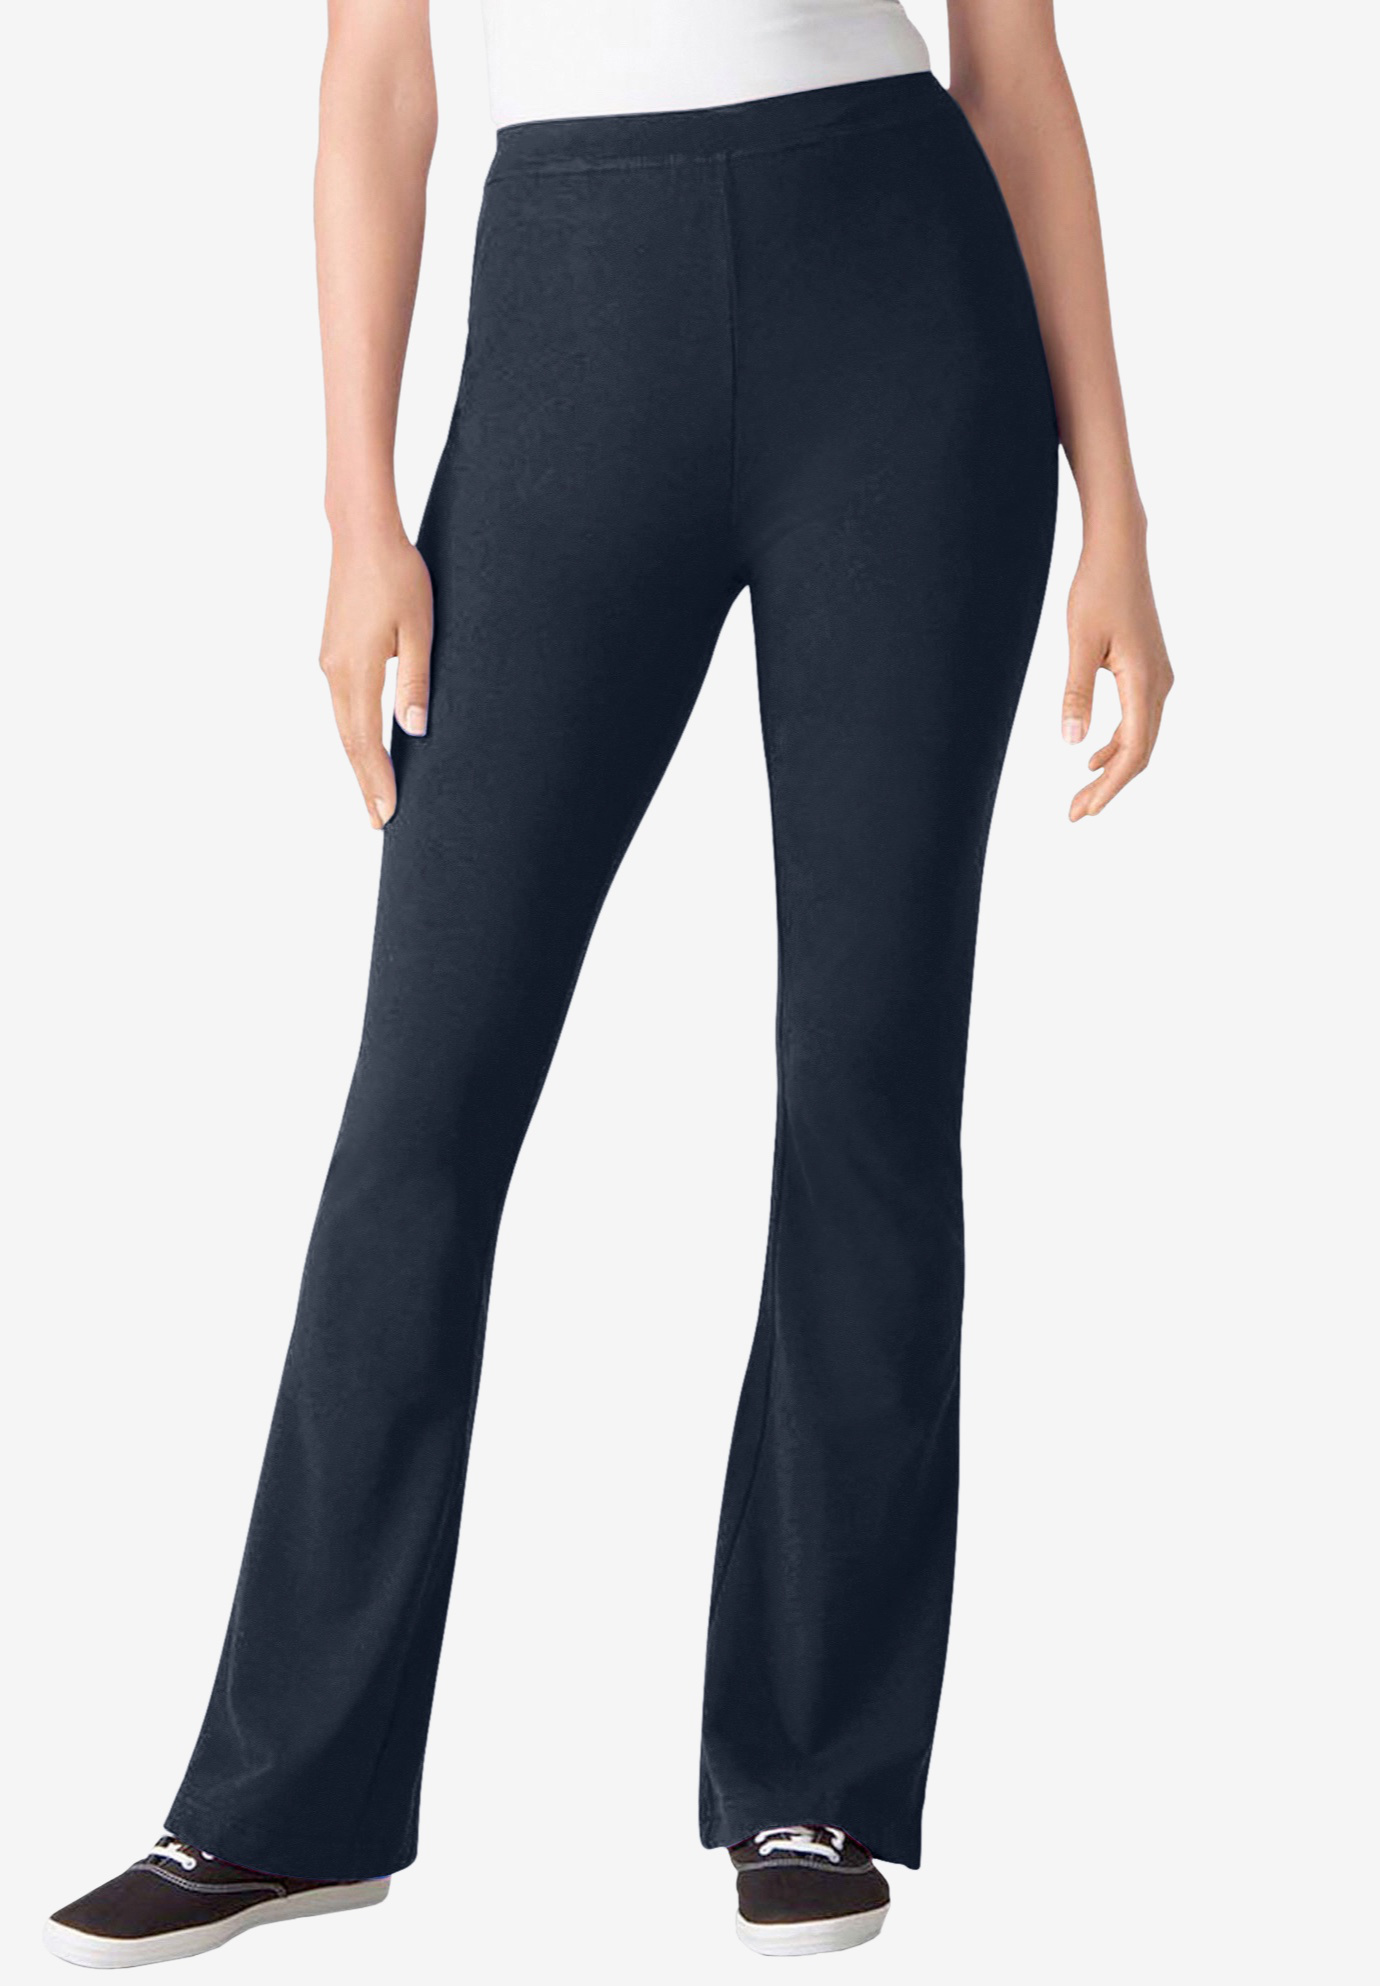 Betabrand plus size petite Dress Pant Yoga Pants 2XLP